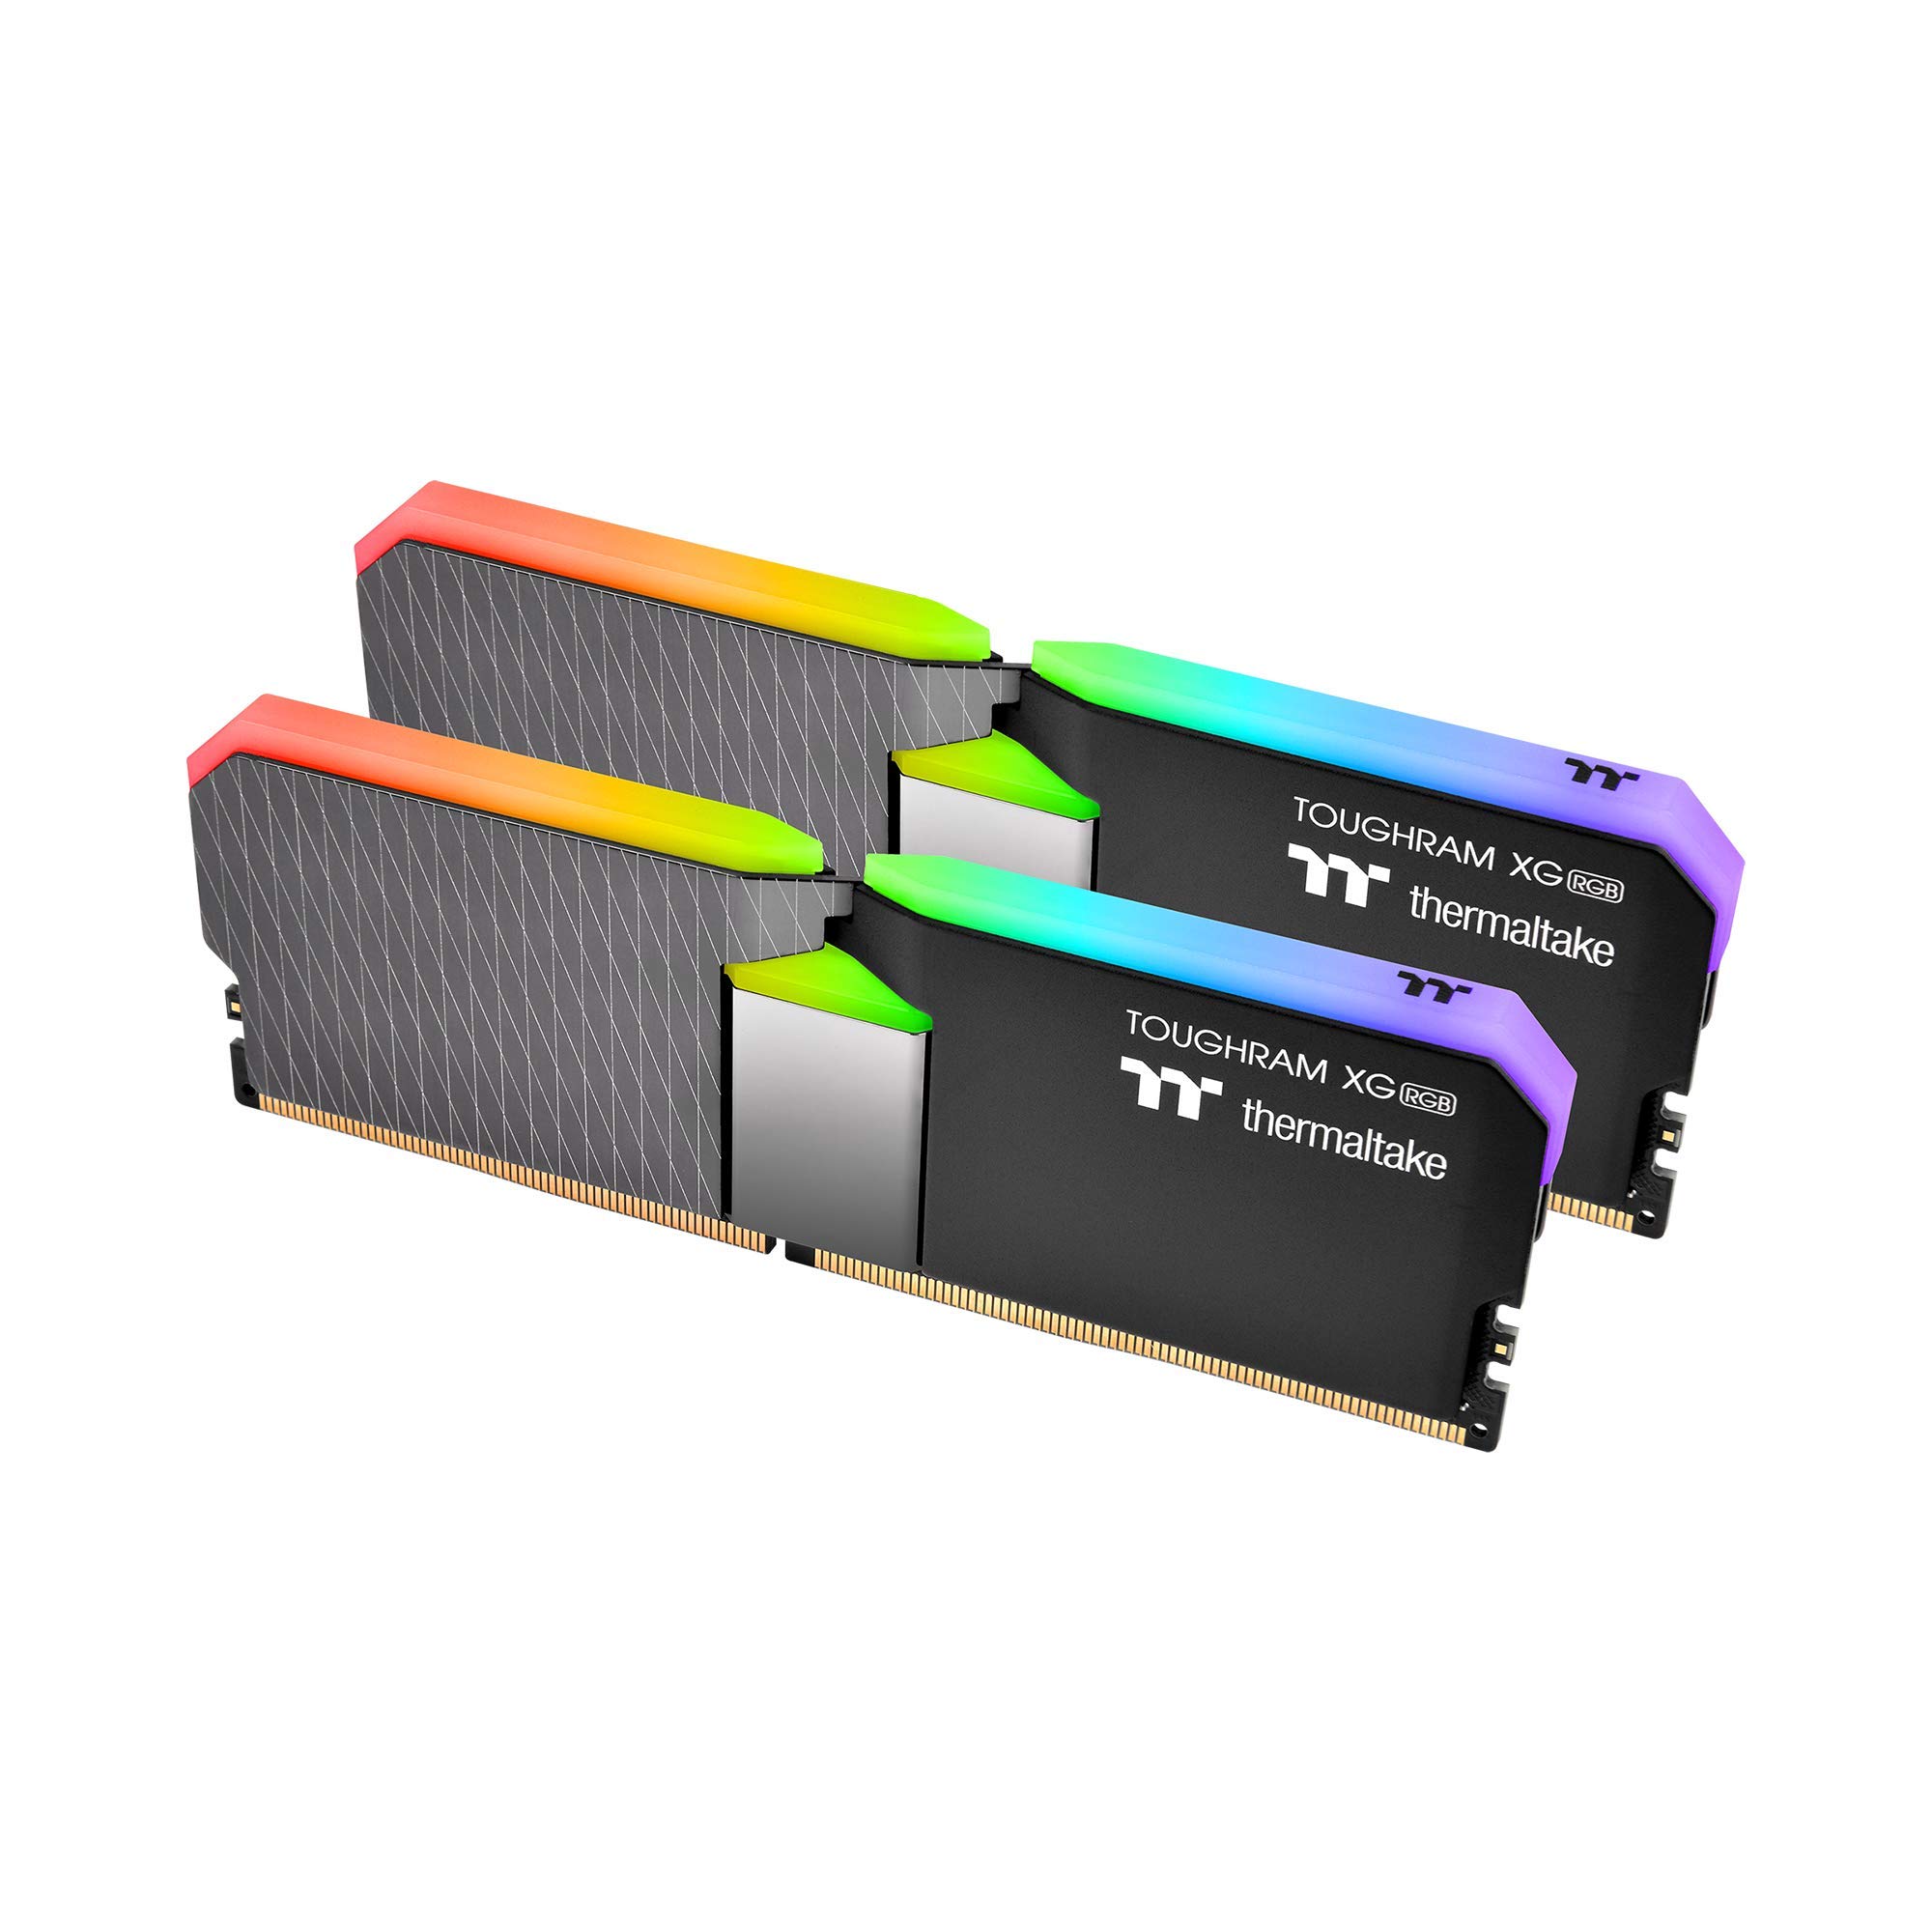 Thermaltake TOUGHRAM XG RGB DDR4 4400MHz 16GB 8GB x 2 16.80万色 RGB AlexaRazer Chroma5V マザーボード 同期ケー